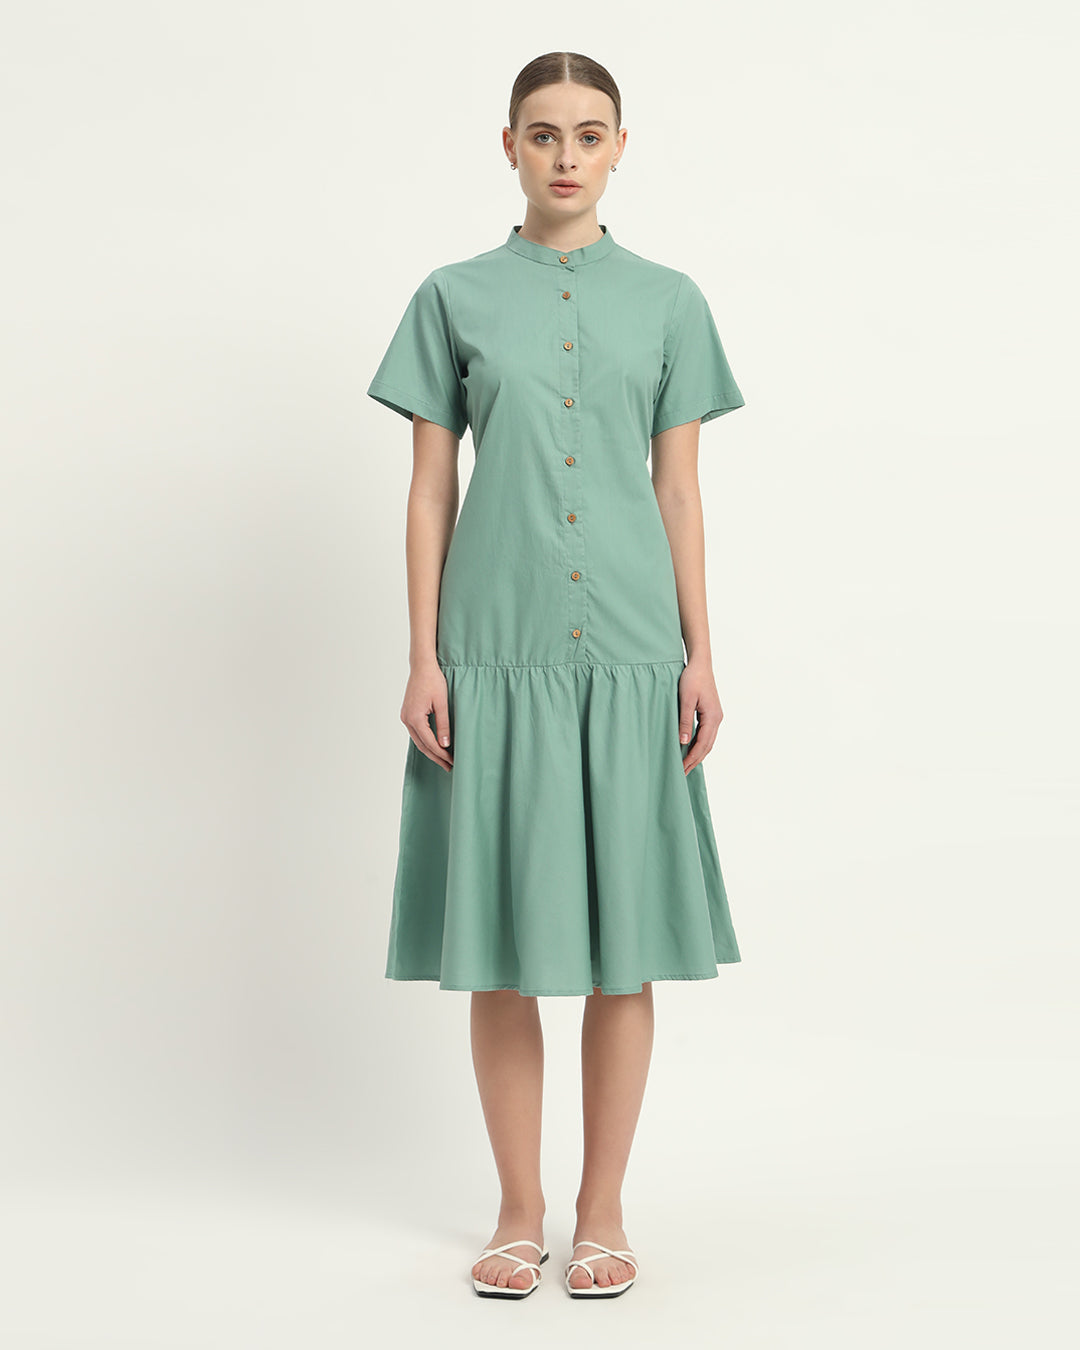 The Mint Melrose Cotton Dress